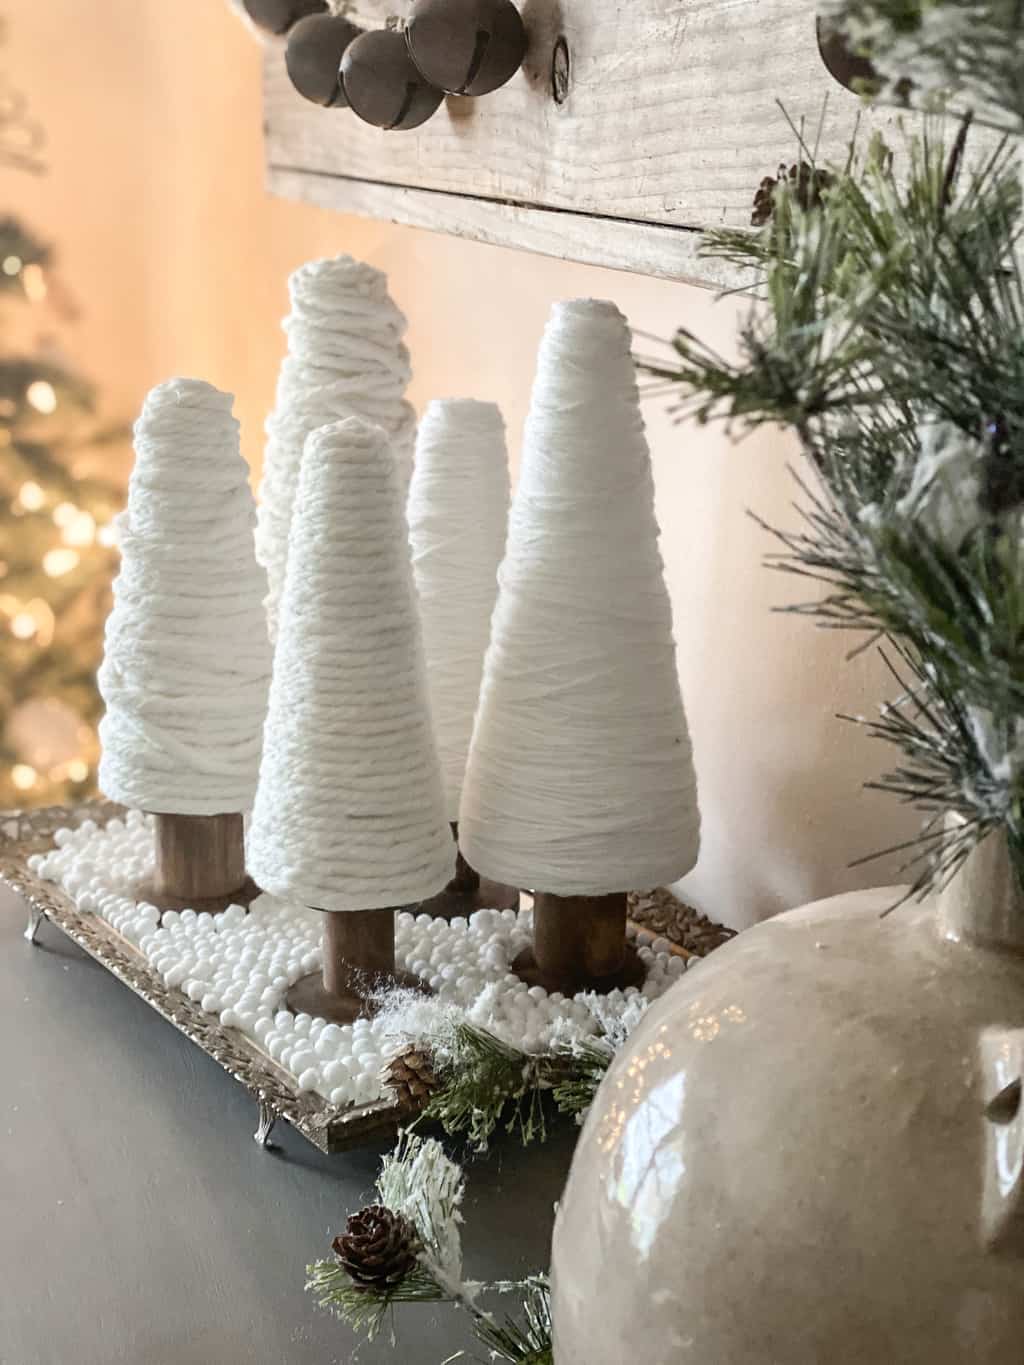 https://www.mycreativedays.com/wp-content/uploads/2019/11/Upcycled-Ribbon-Spool-Christmas-Trees-Idea.jpg